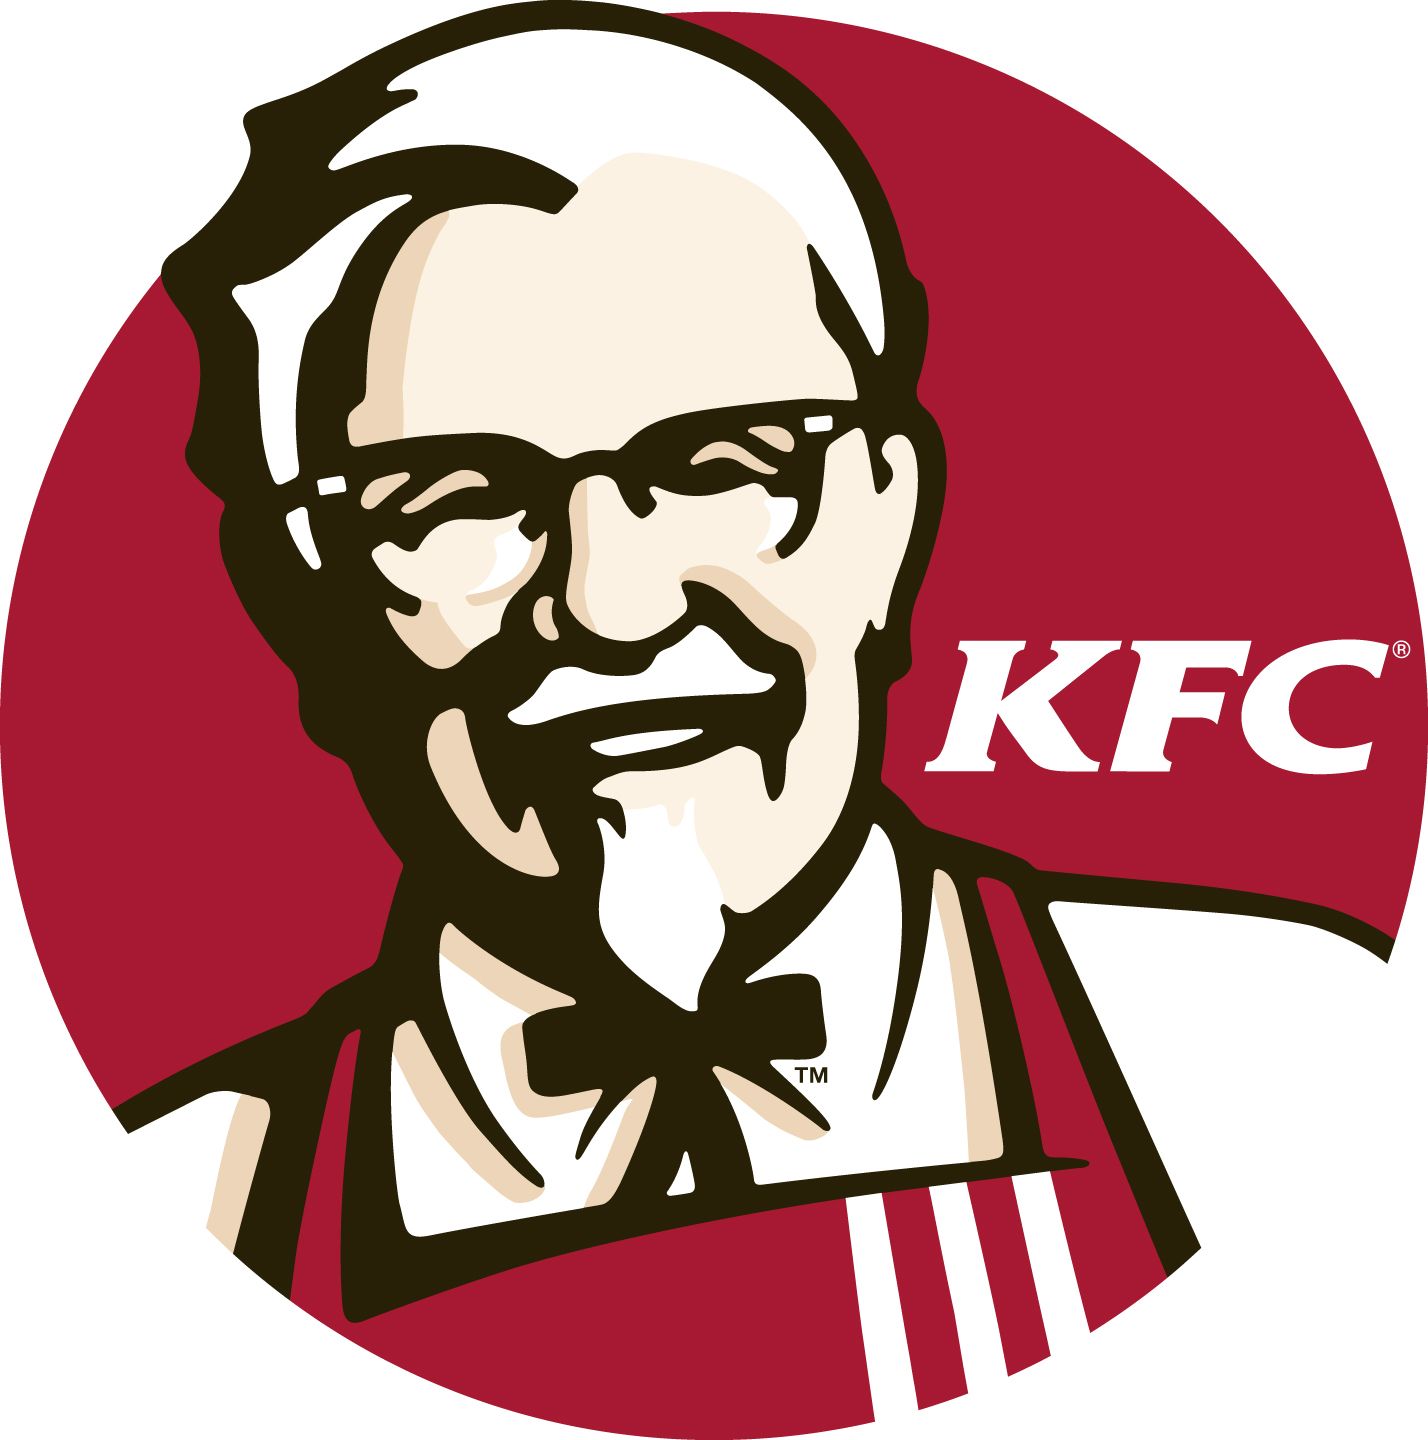 Promociones KFC 